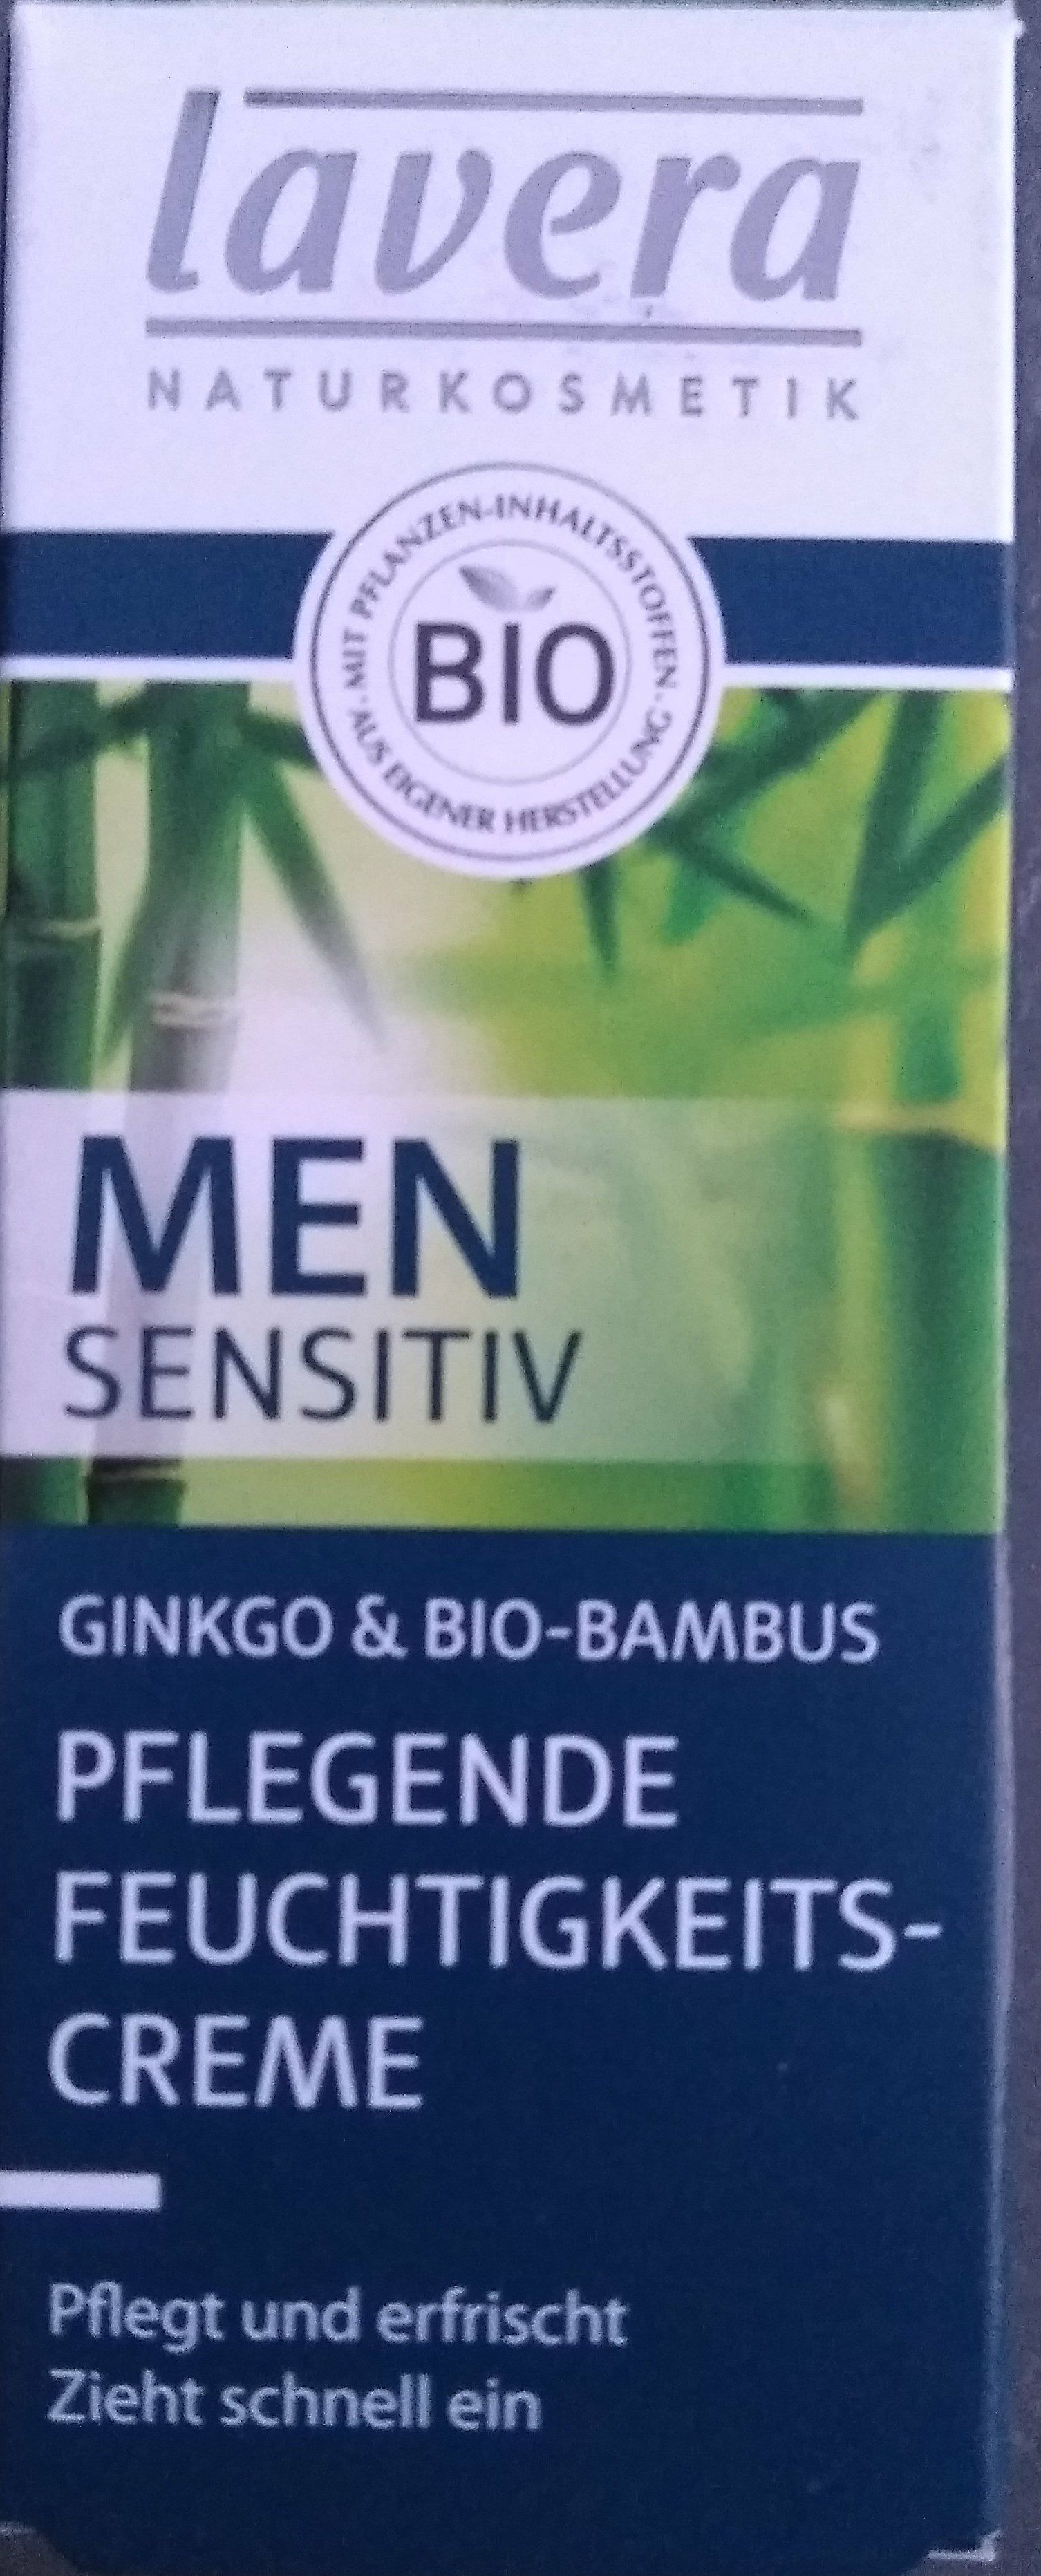 Men Sensitiv Pflegende Feuchtigkeitscreme - Produit - de